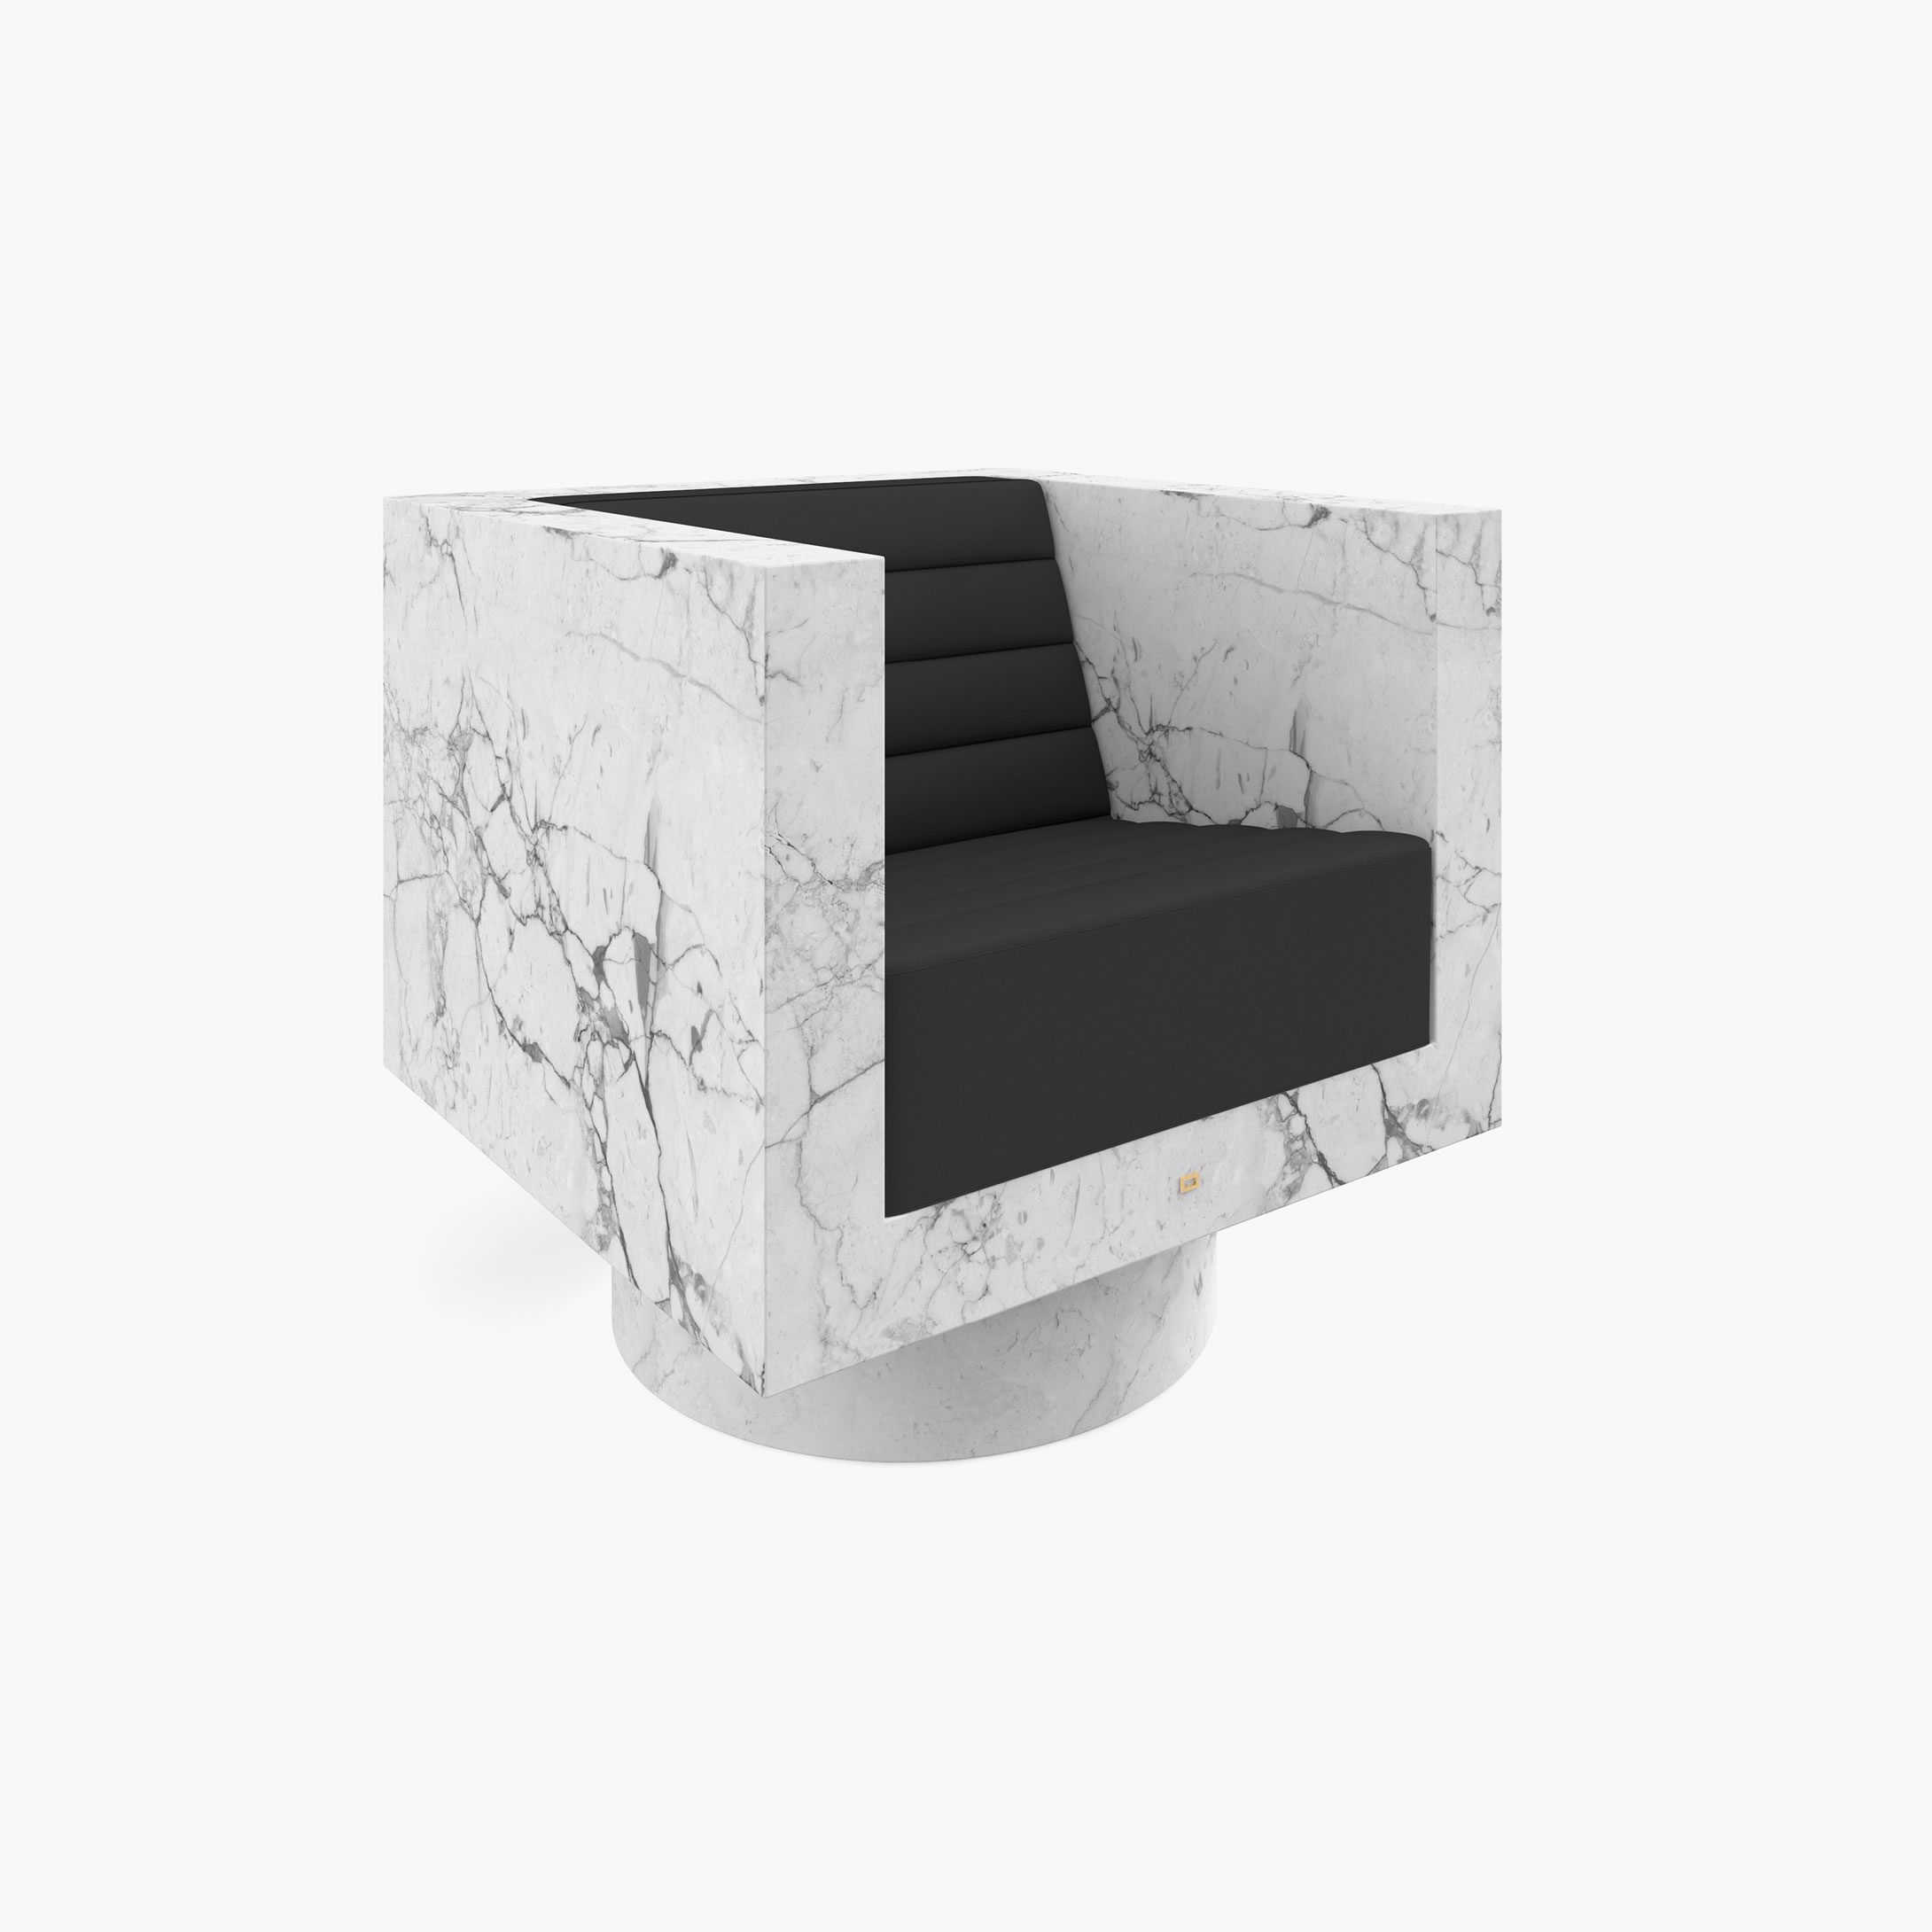 Stuhl mit Armlehnen Weiss Arabescato Marmor elegant Living Room Kunstwerk Stuehle  Baenke FS 404 FELIX SCHWAKE